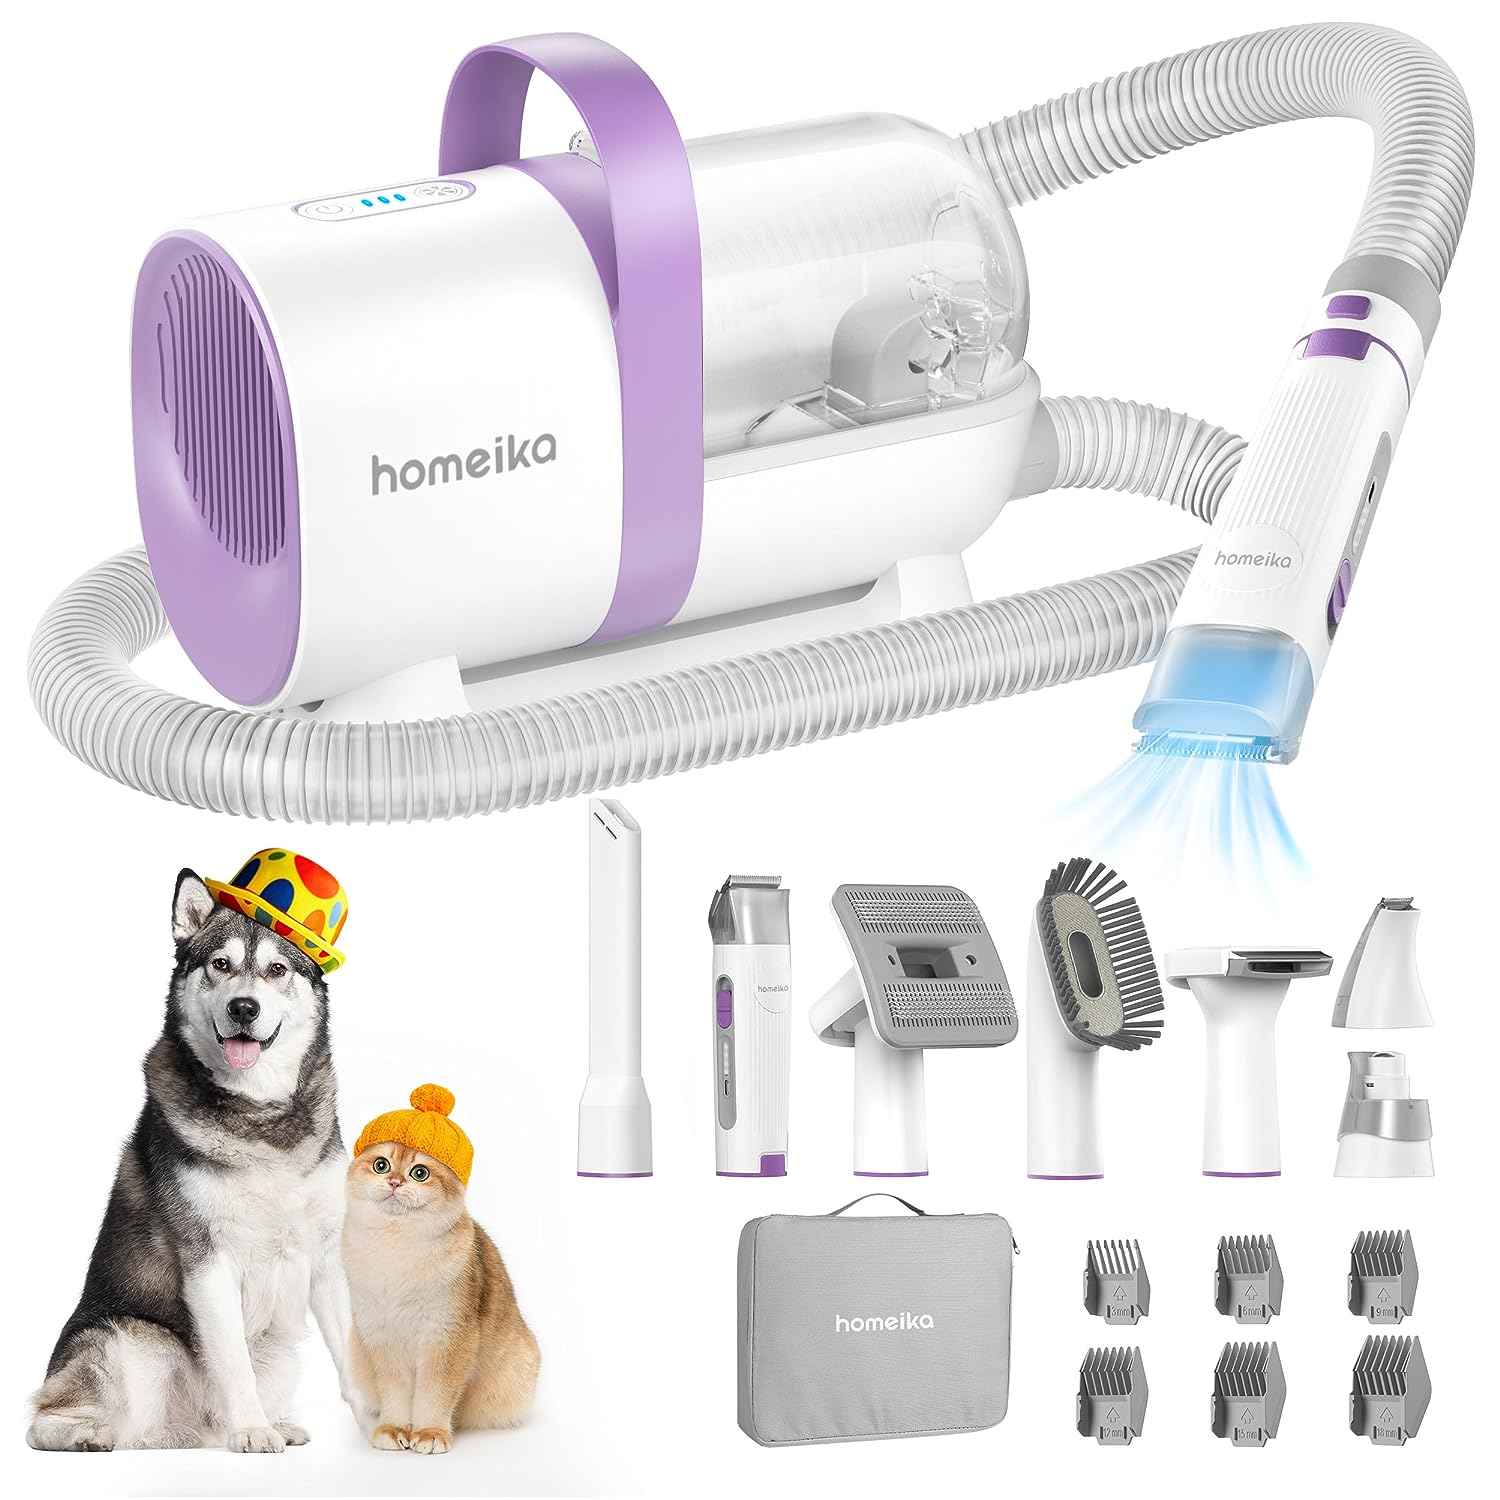 Homeika Dog Grooming Kit